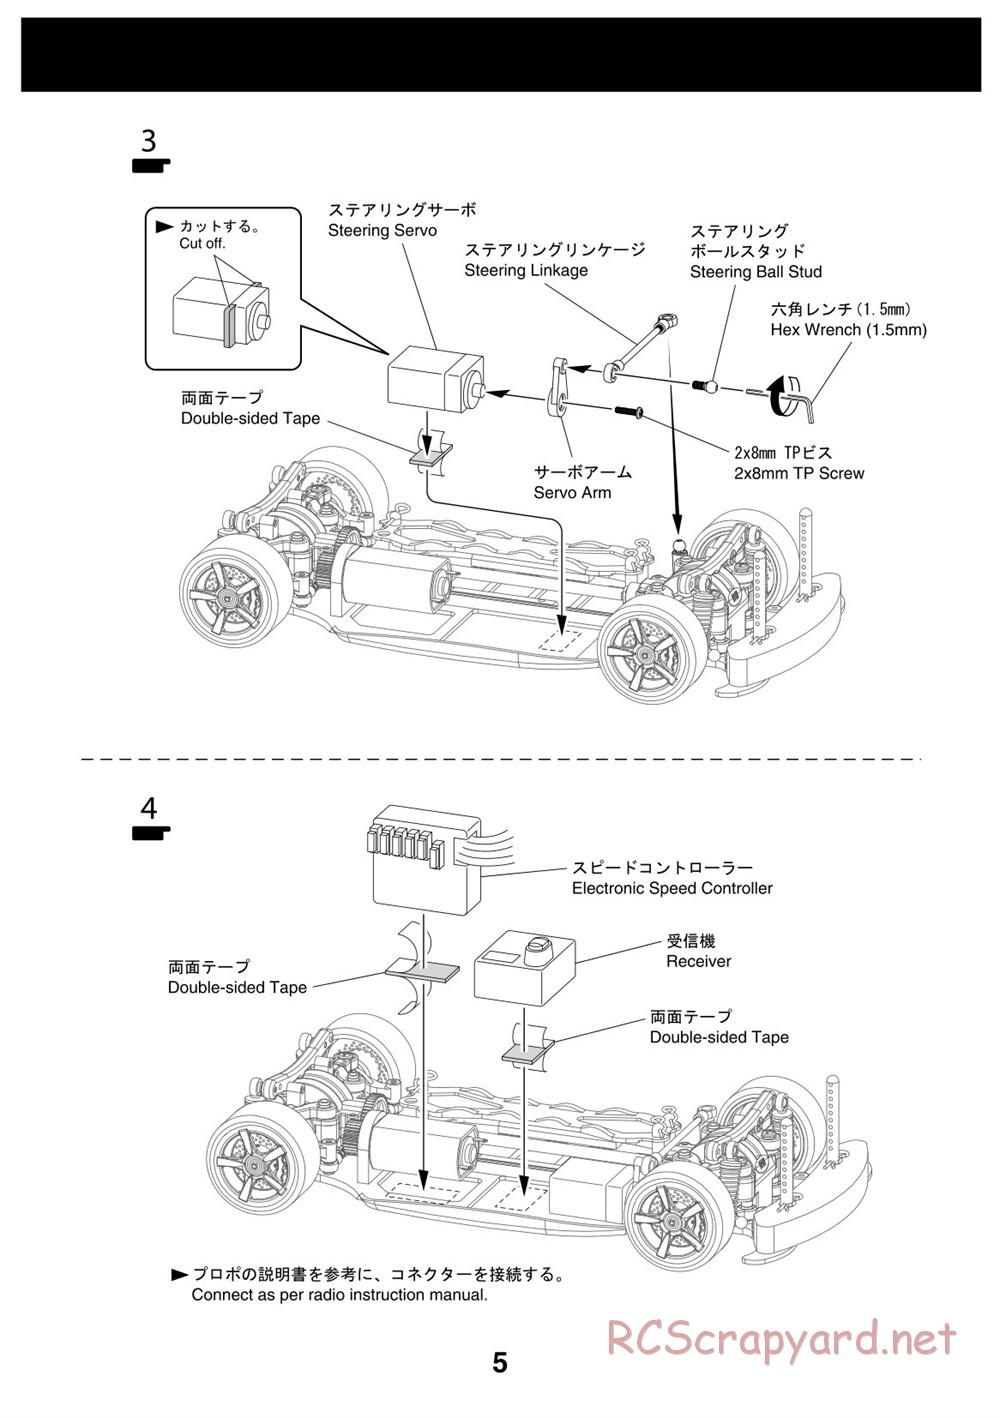 Kyosho - NRX-18 - Manual - Page 5